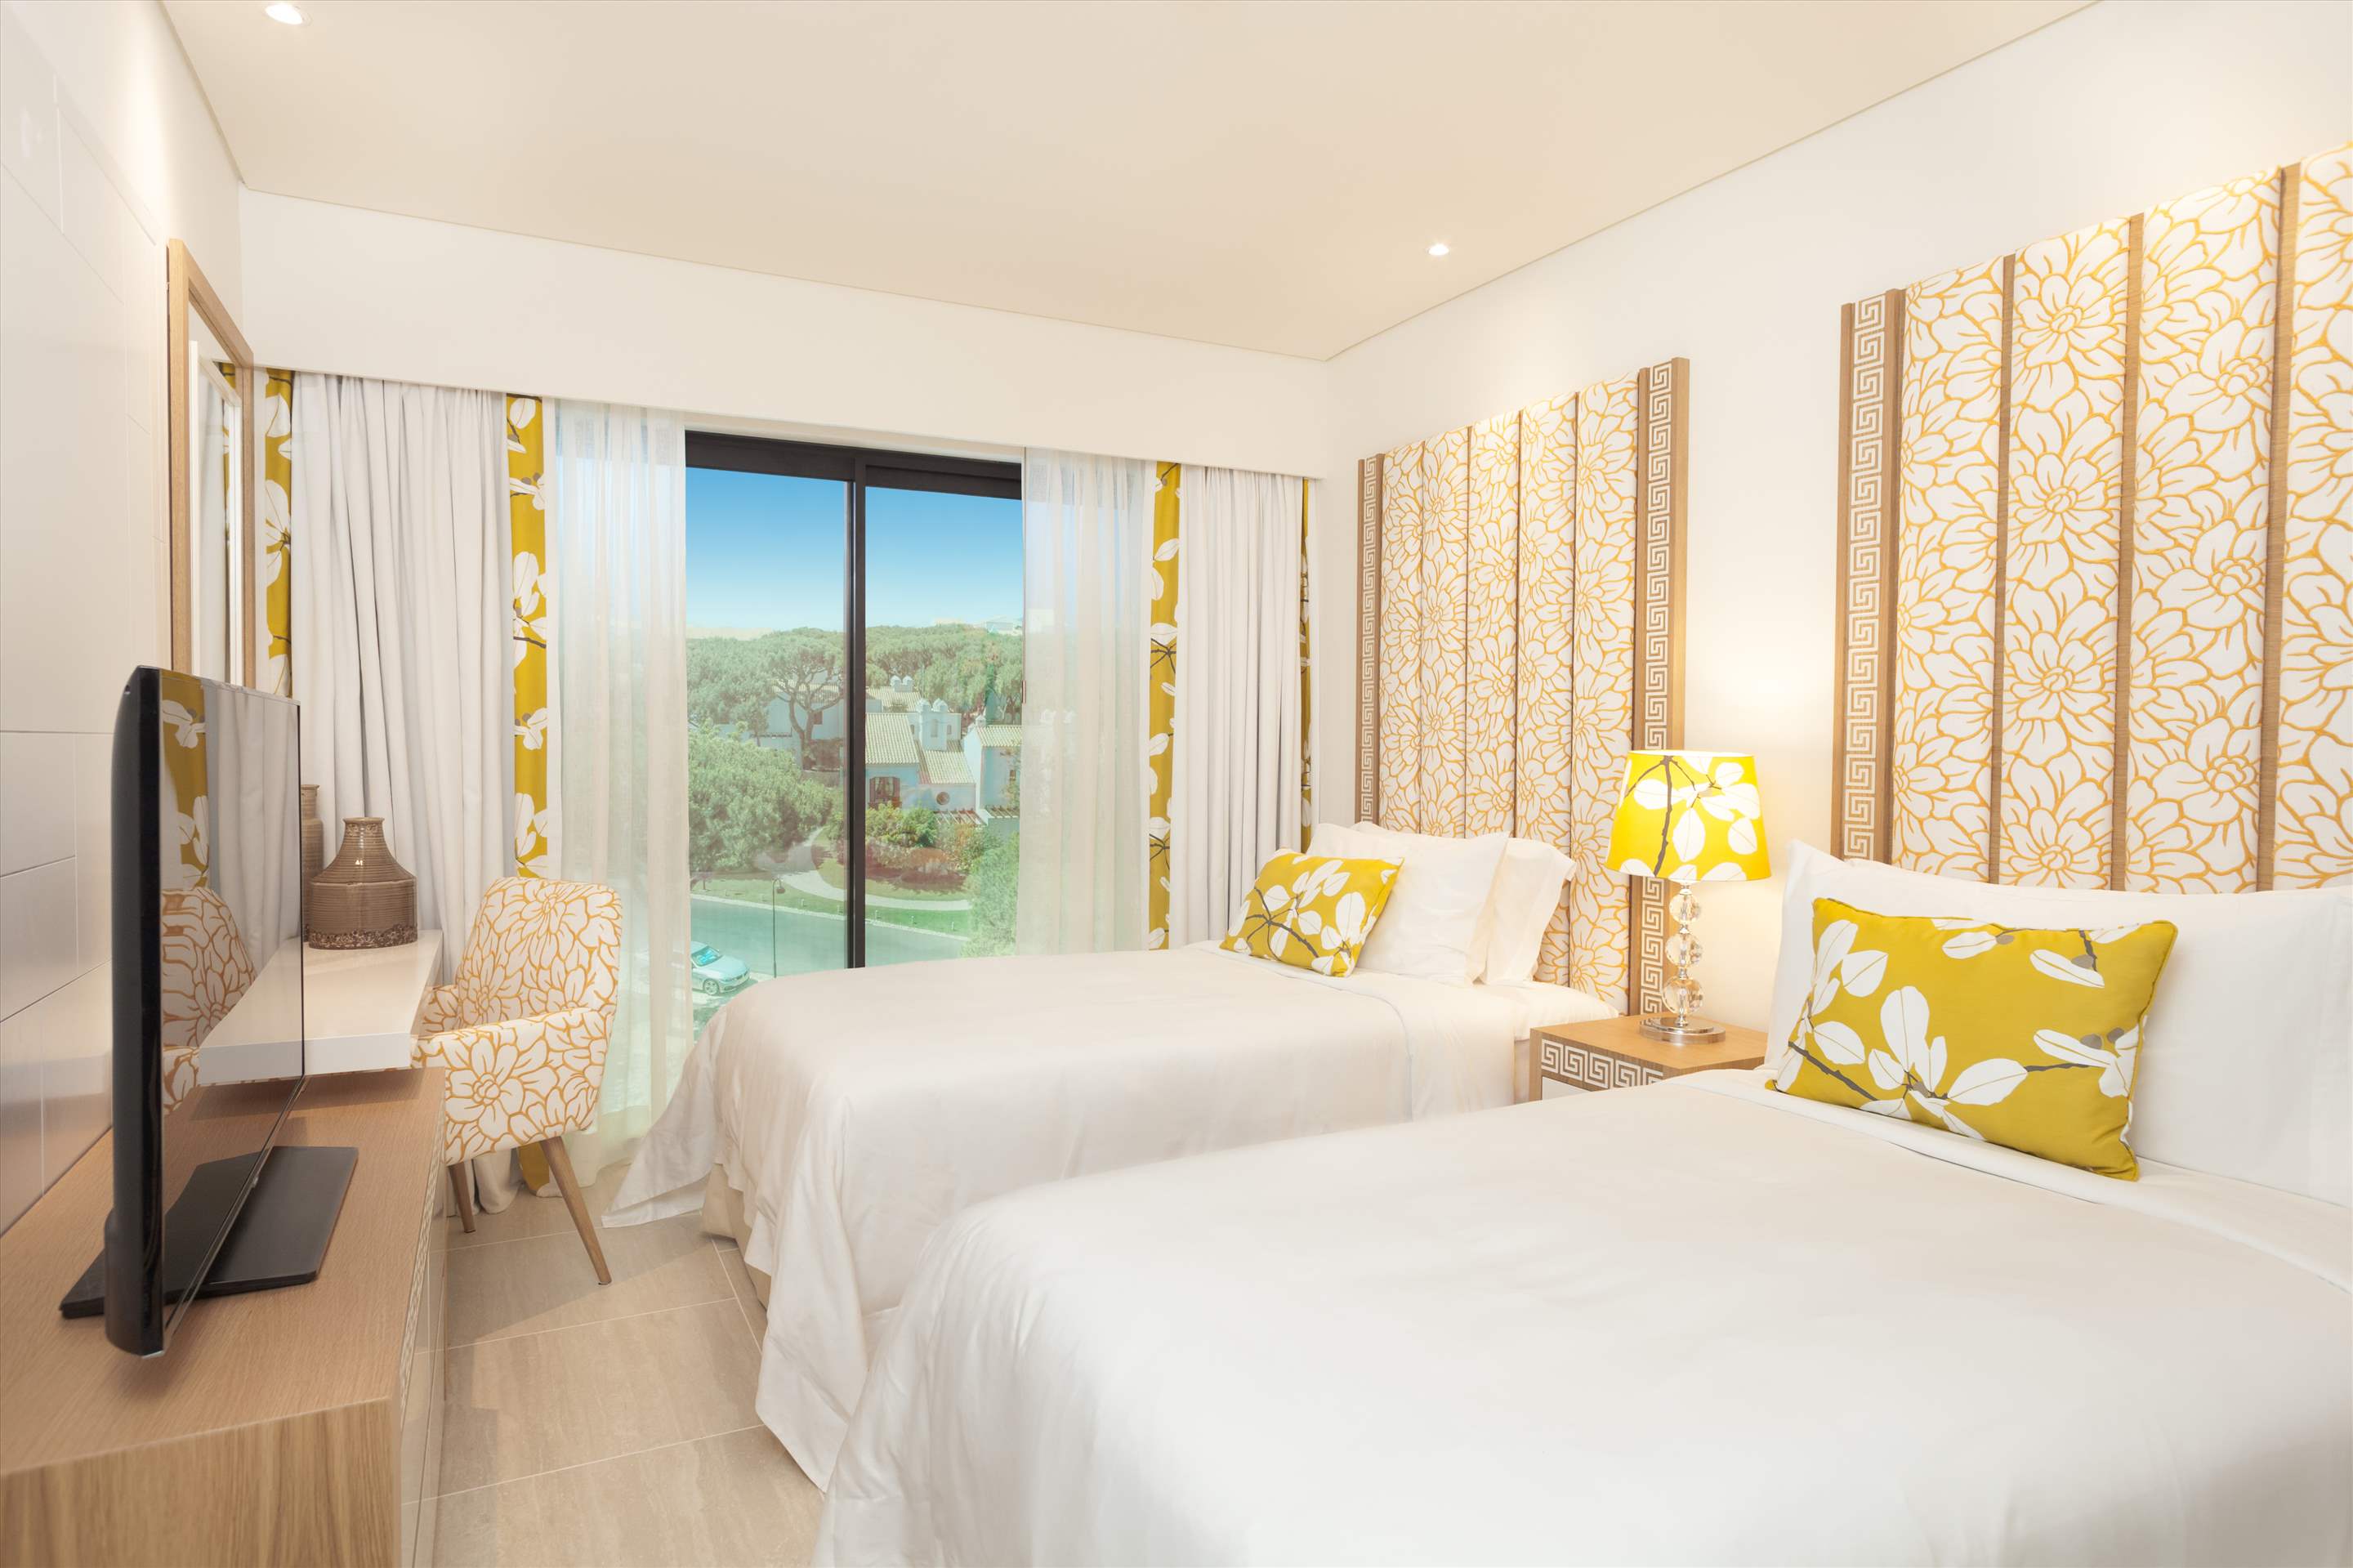 Pine Cliffs Gardens, One Bedroom Suite, S/C Basis, 1 bedroom apartment in Pine Cliffs Resort, Algarve Photo #13